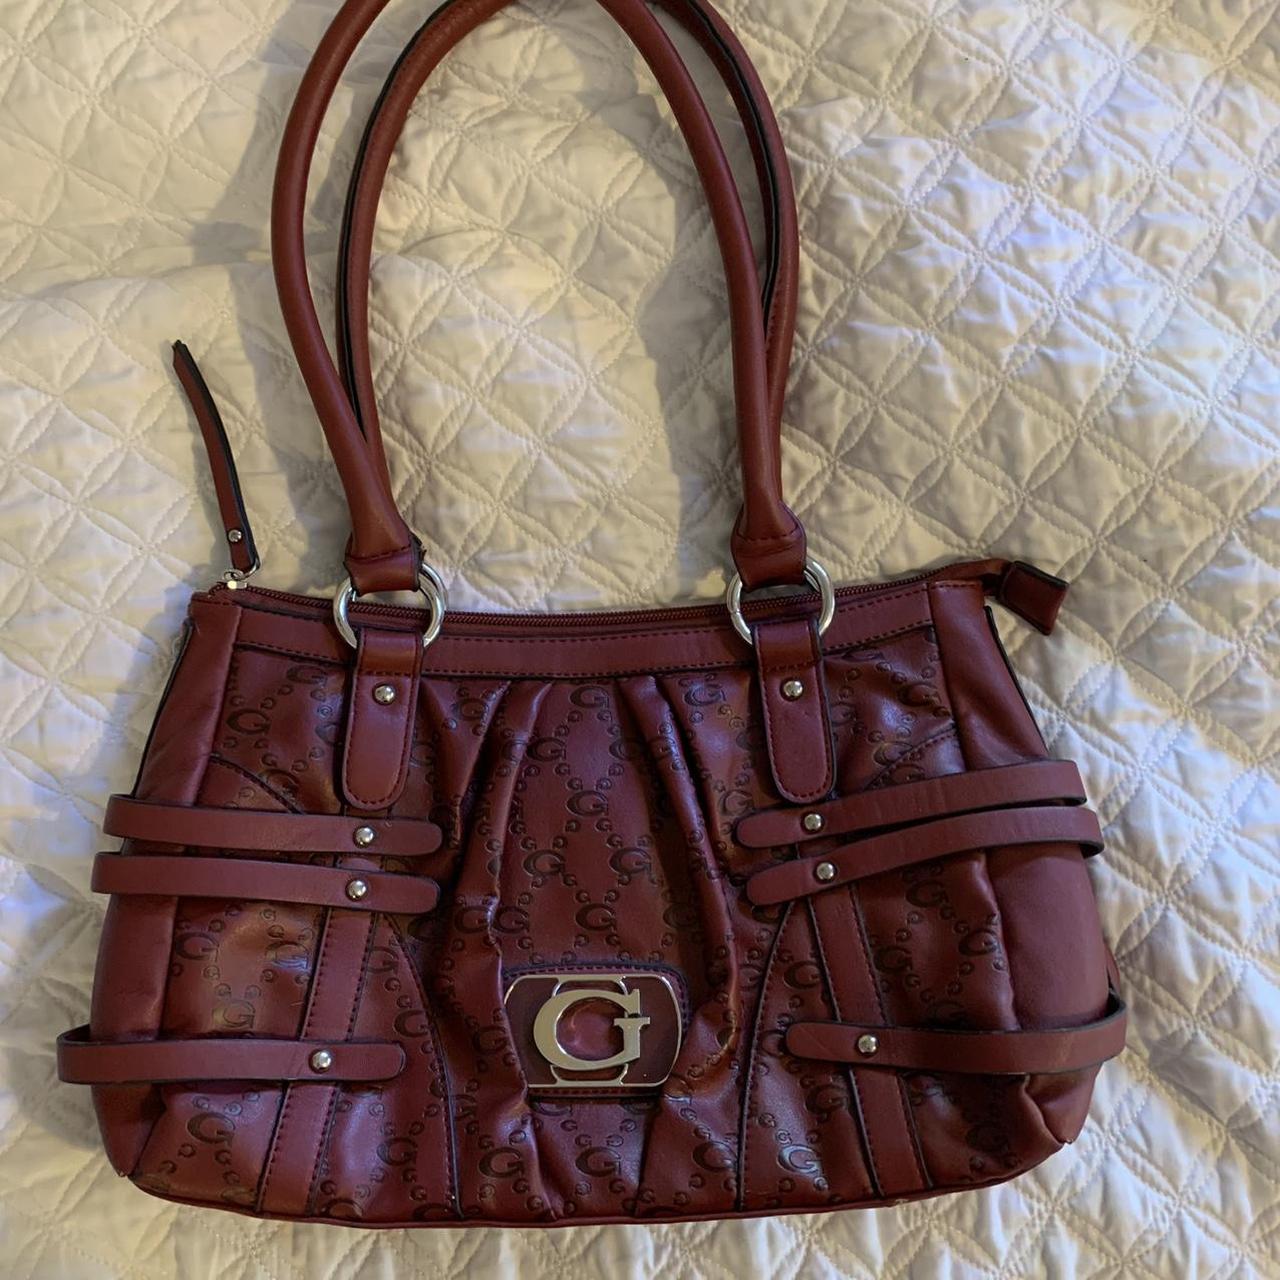 Product Image 2 - Fiorelli burgundy handbag 💋
Size: Medium
Material: